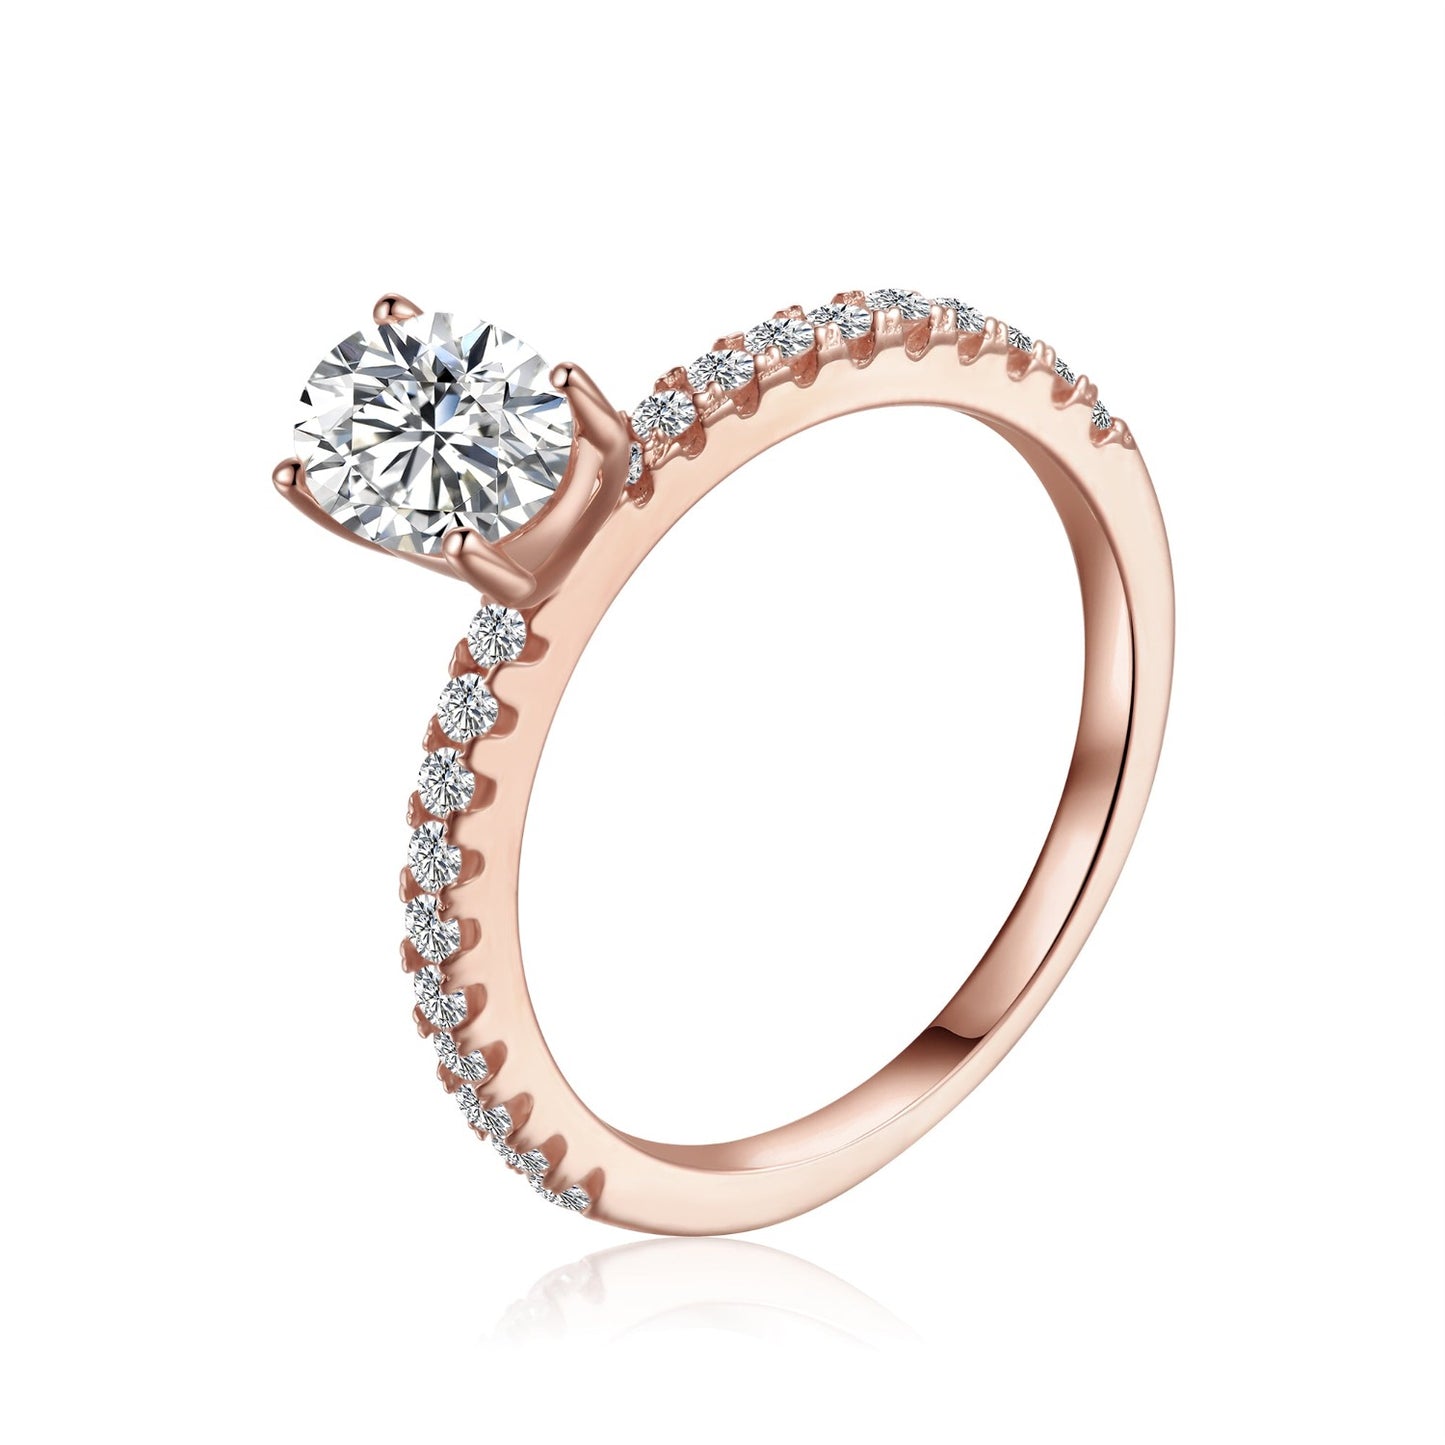 Elegant 1.00ct Oval Cut Moissanite Engagement Ring Set in 9ct Rose Gold